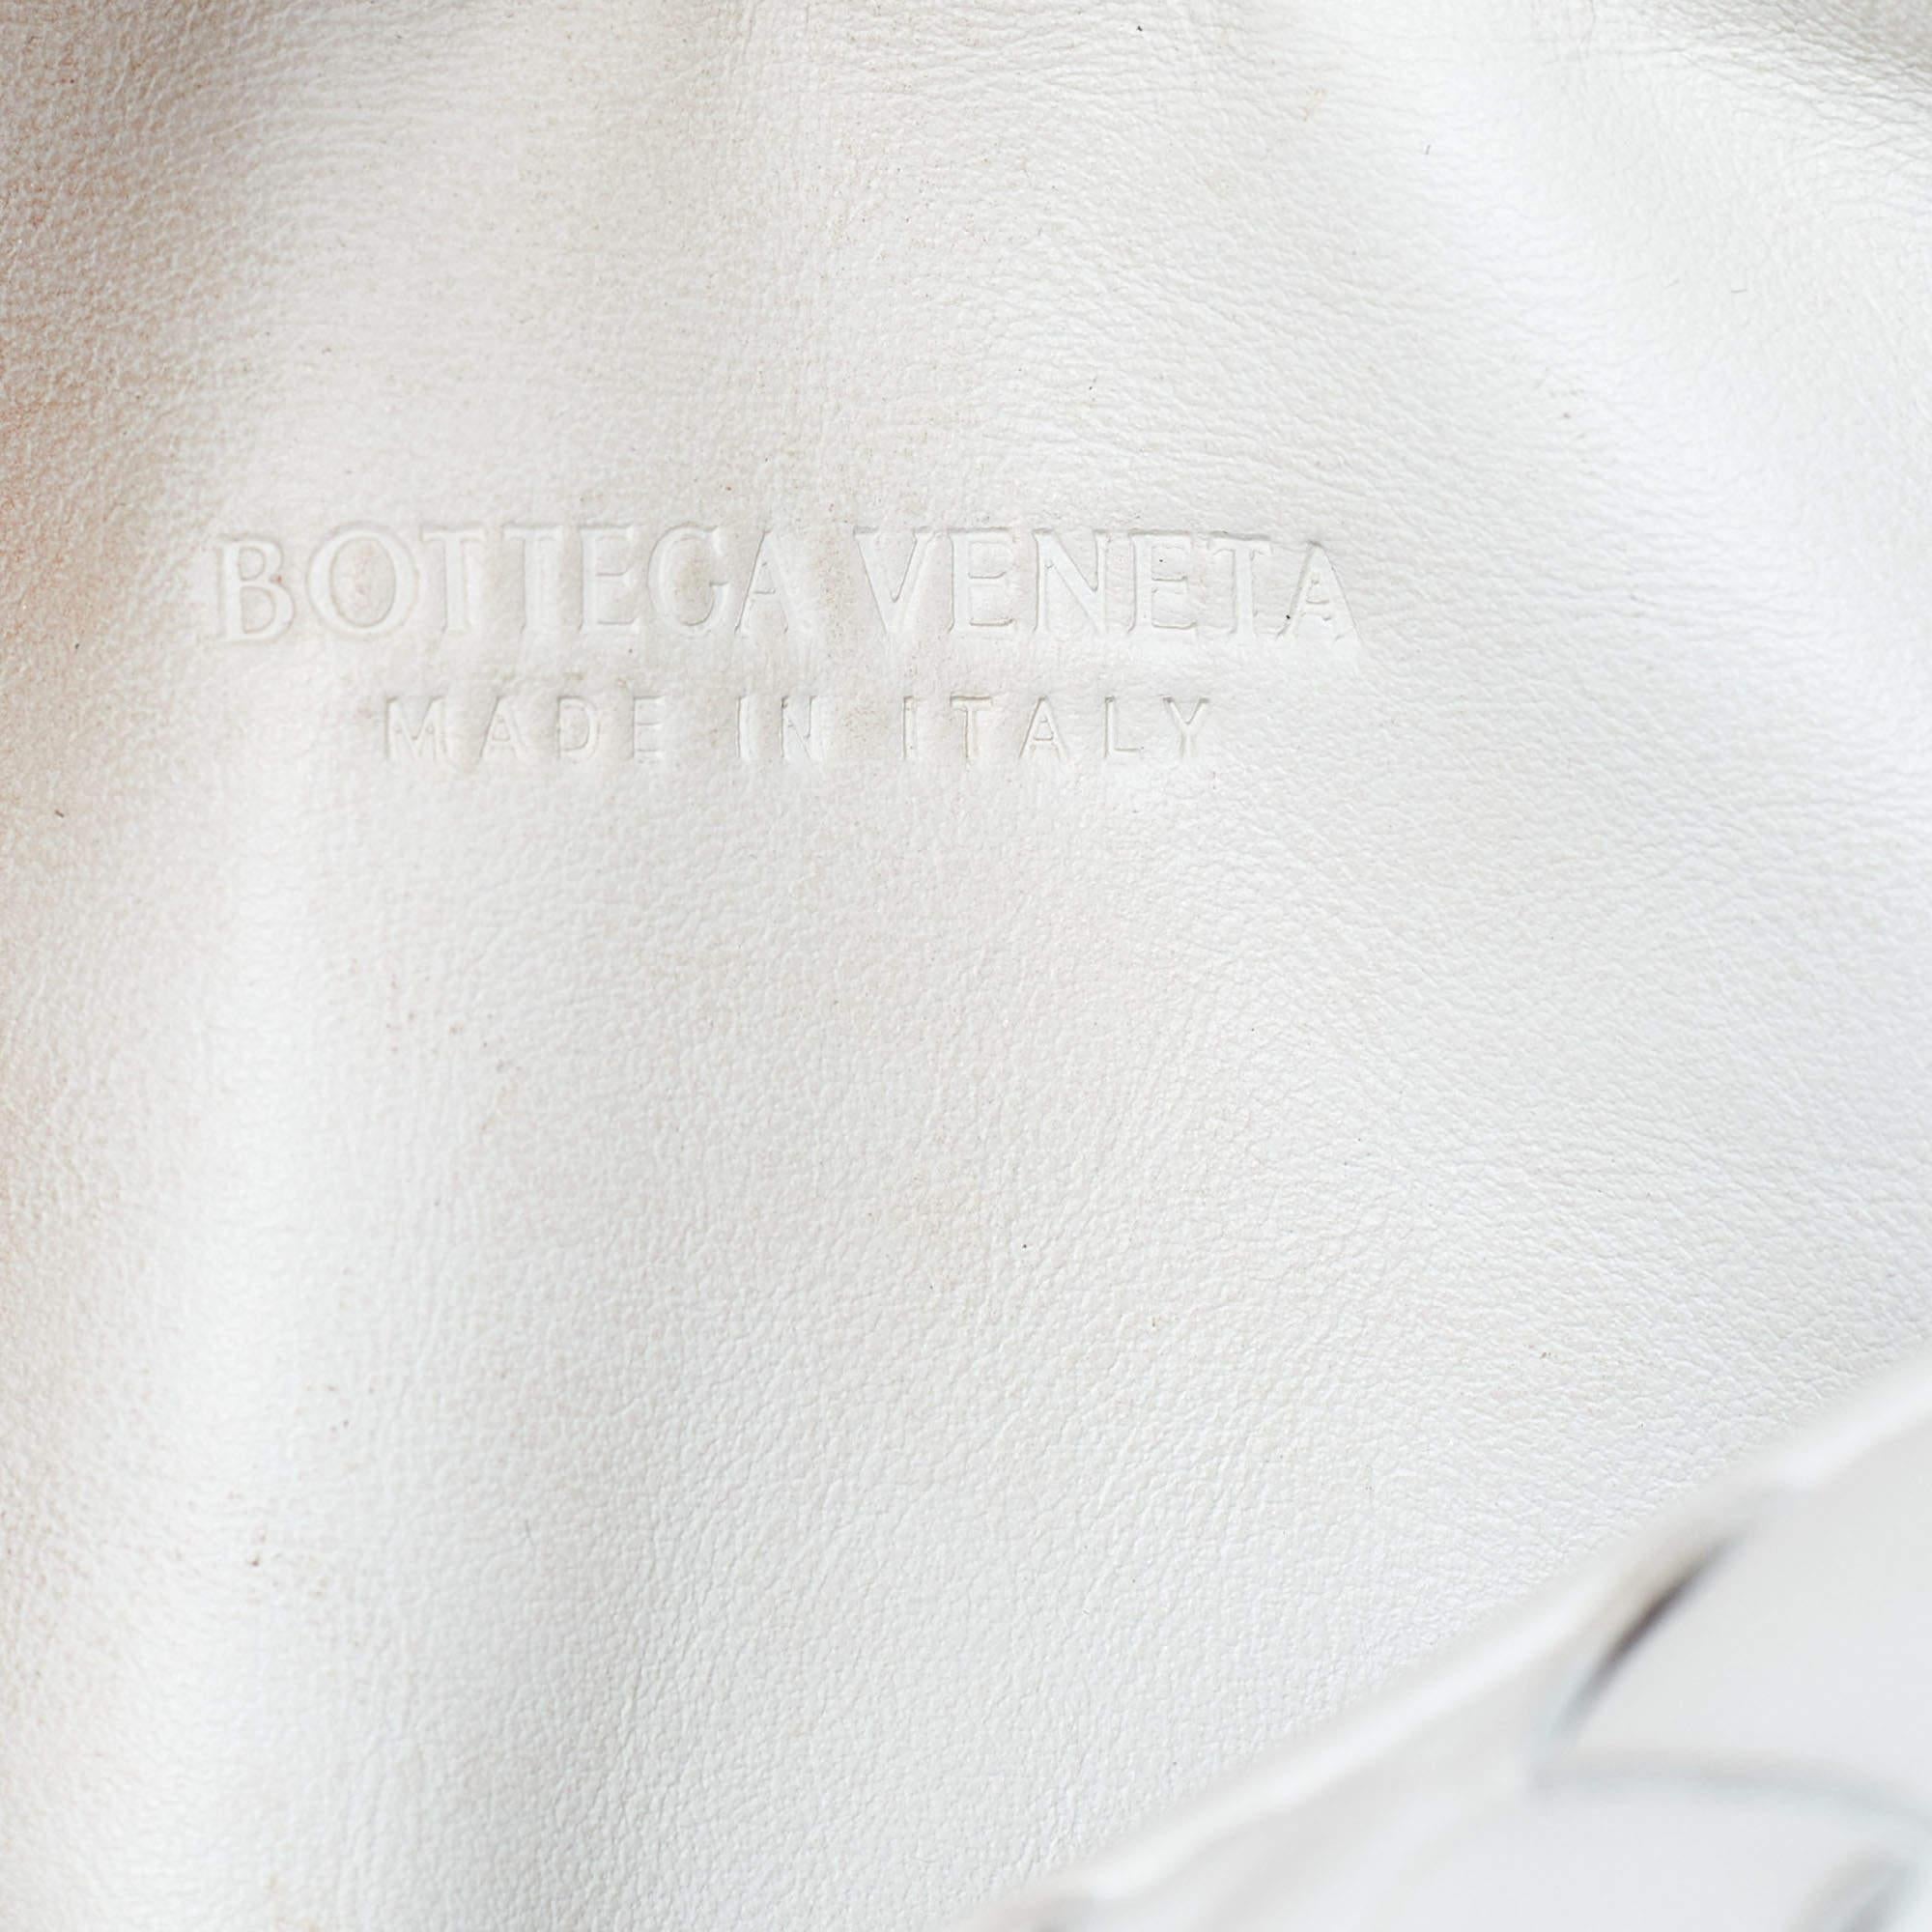 Bottega Veneta White Intrecciato Leather Mini BV Jodie Bag 7